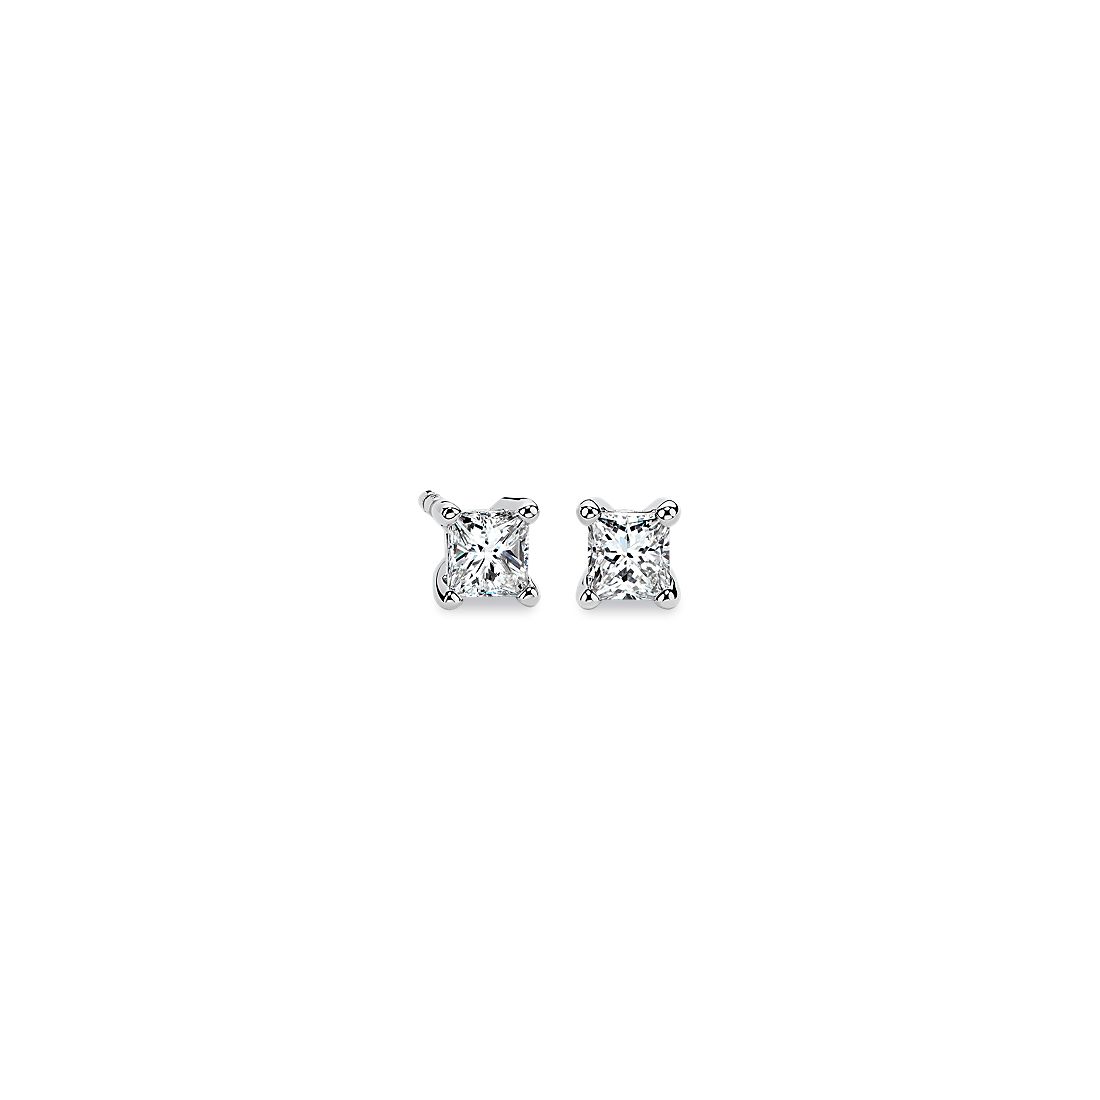 Princess-Cut Diamond Earrings in Platinum (1/3 ct. tw.)